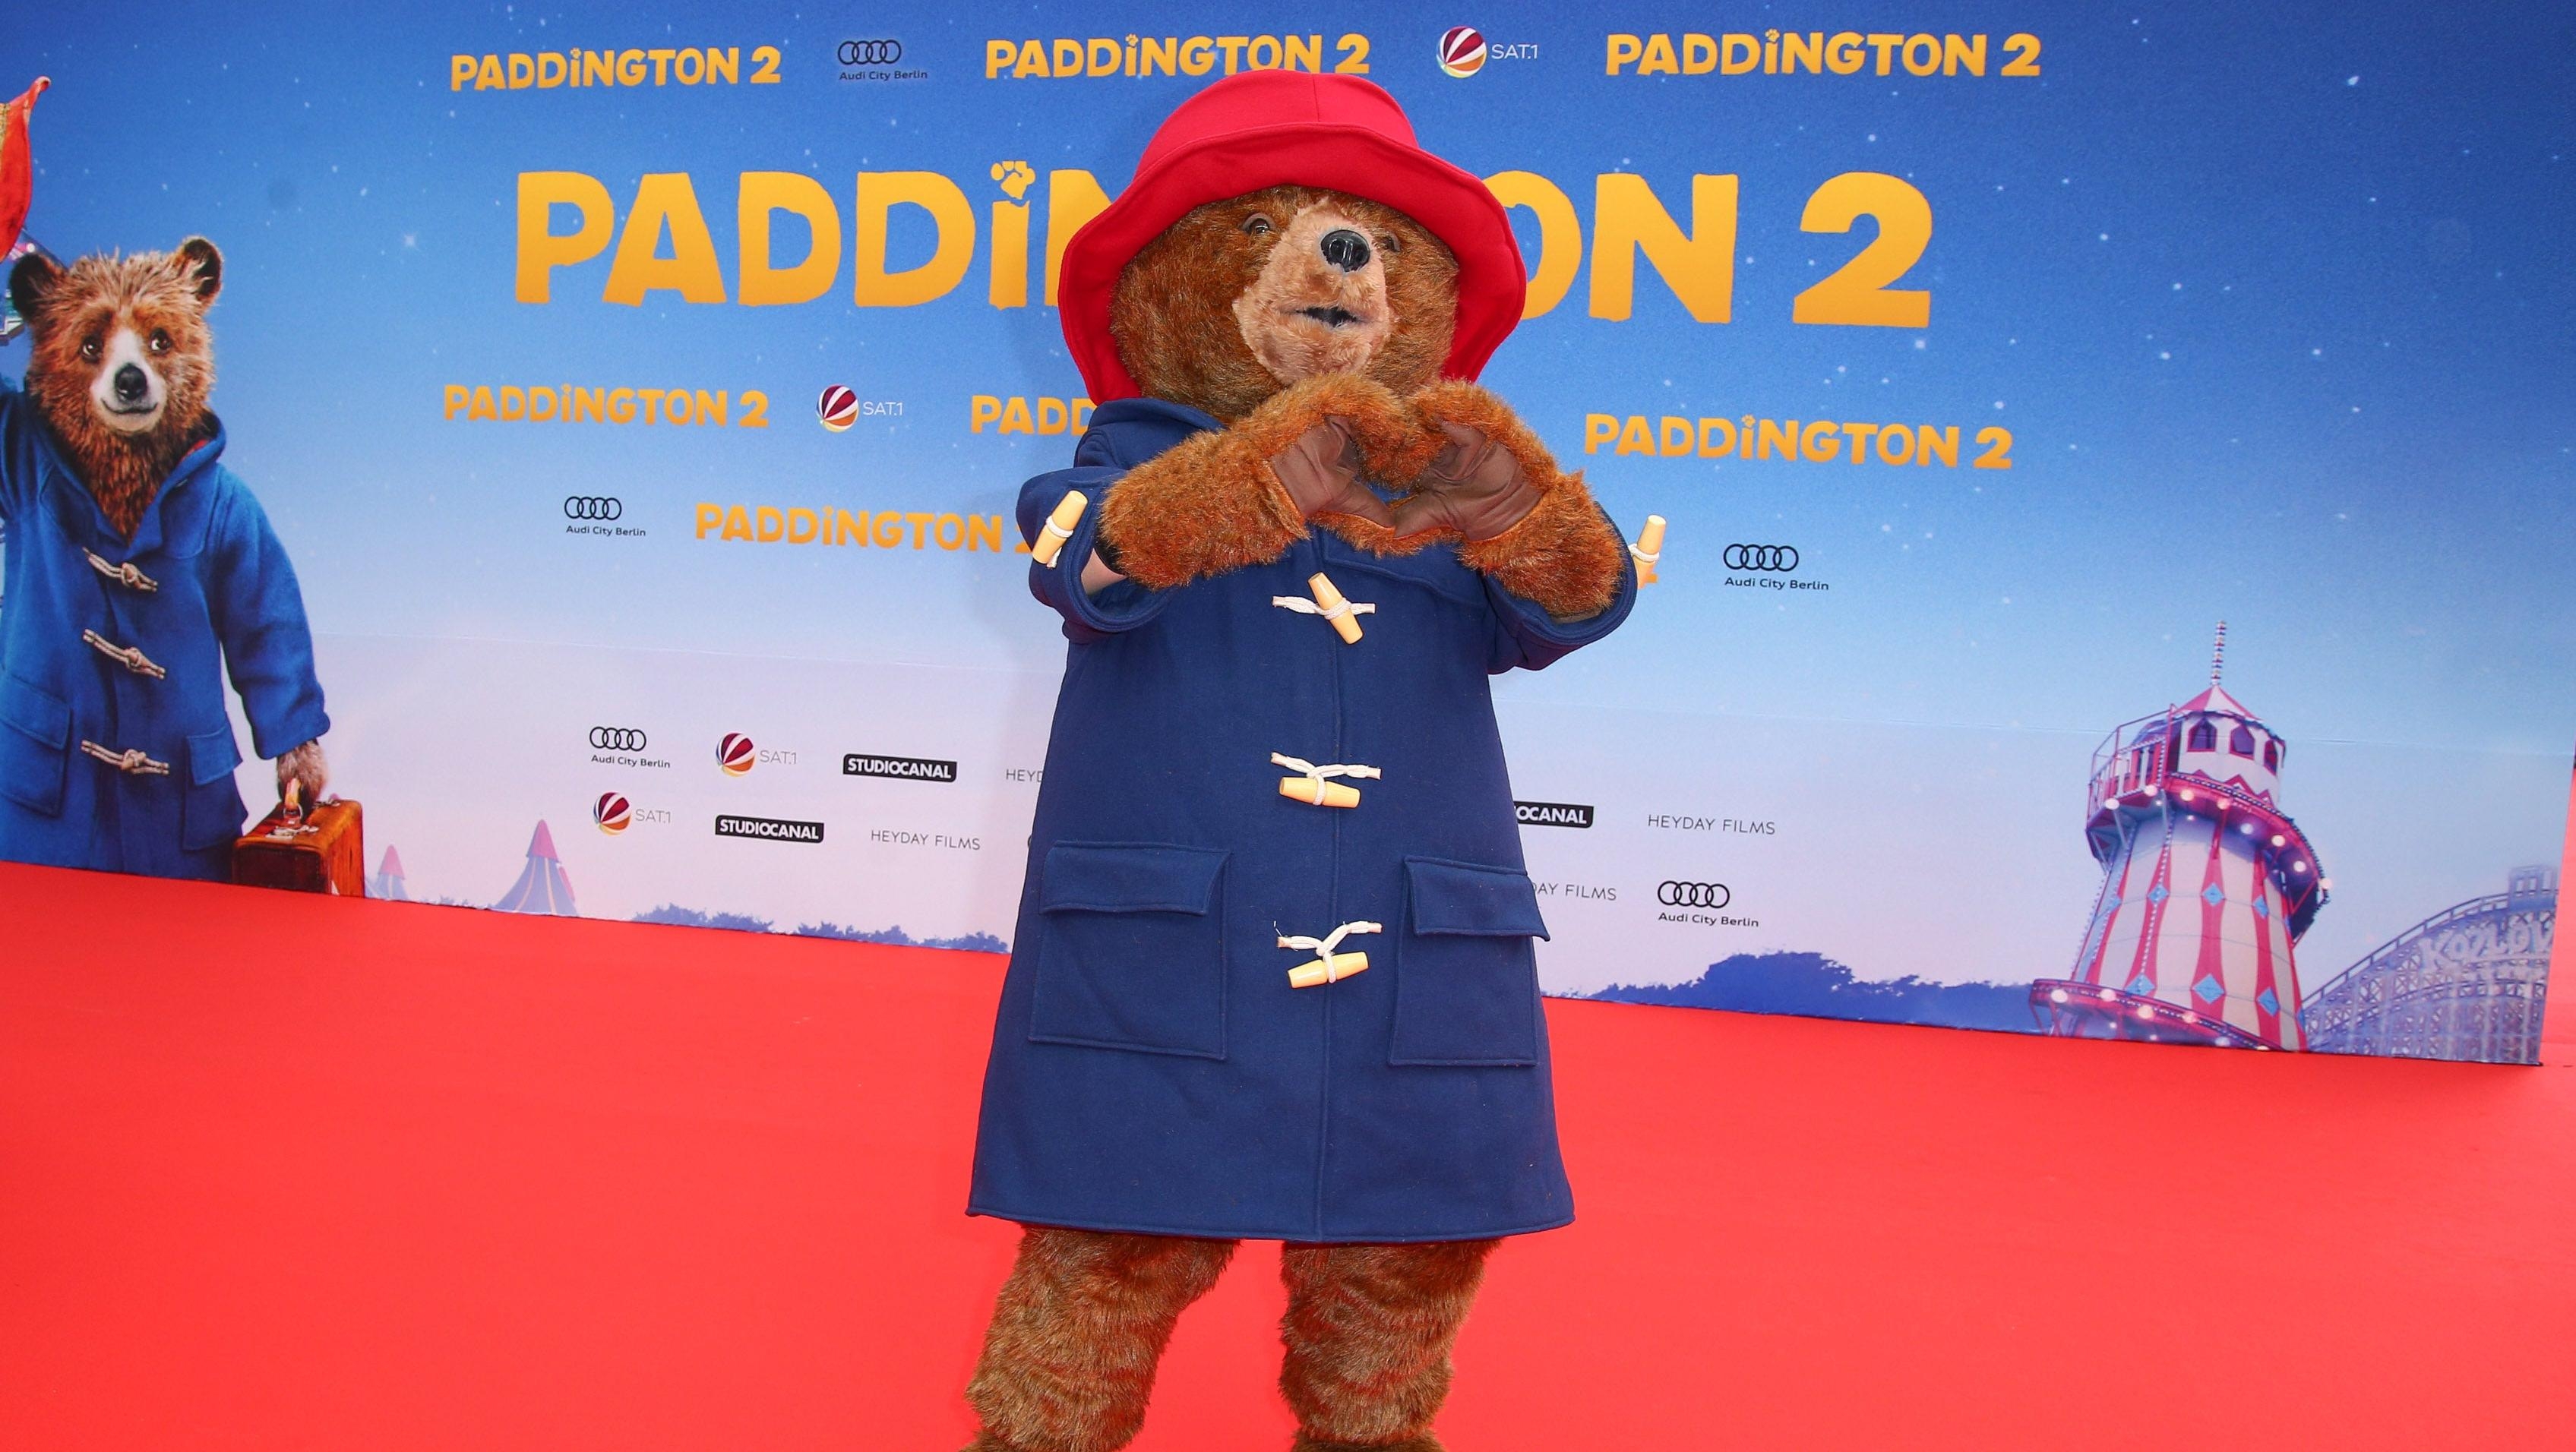 Fear not, marmalade heads, Paddington 3 starts shooting this year